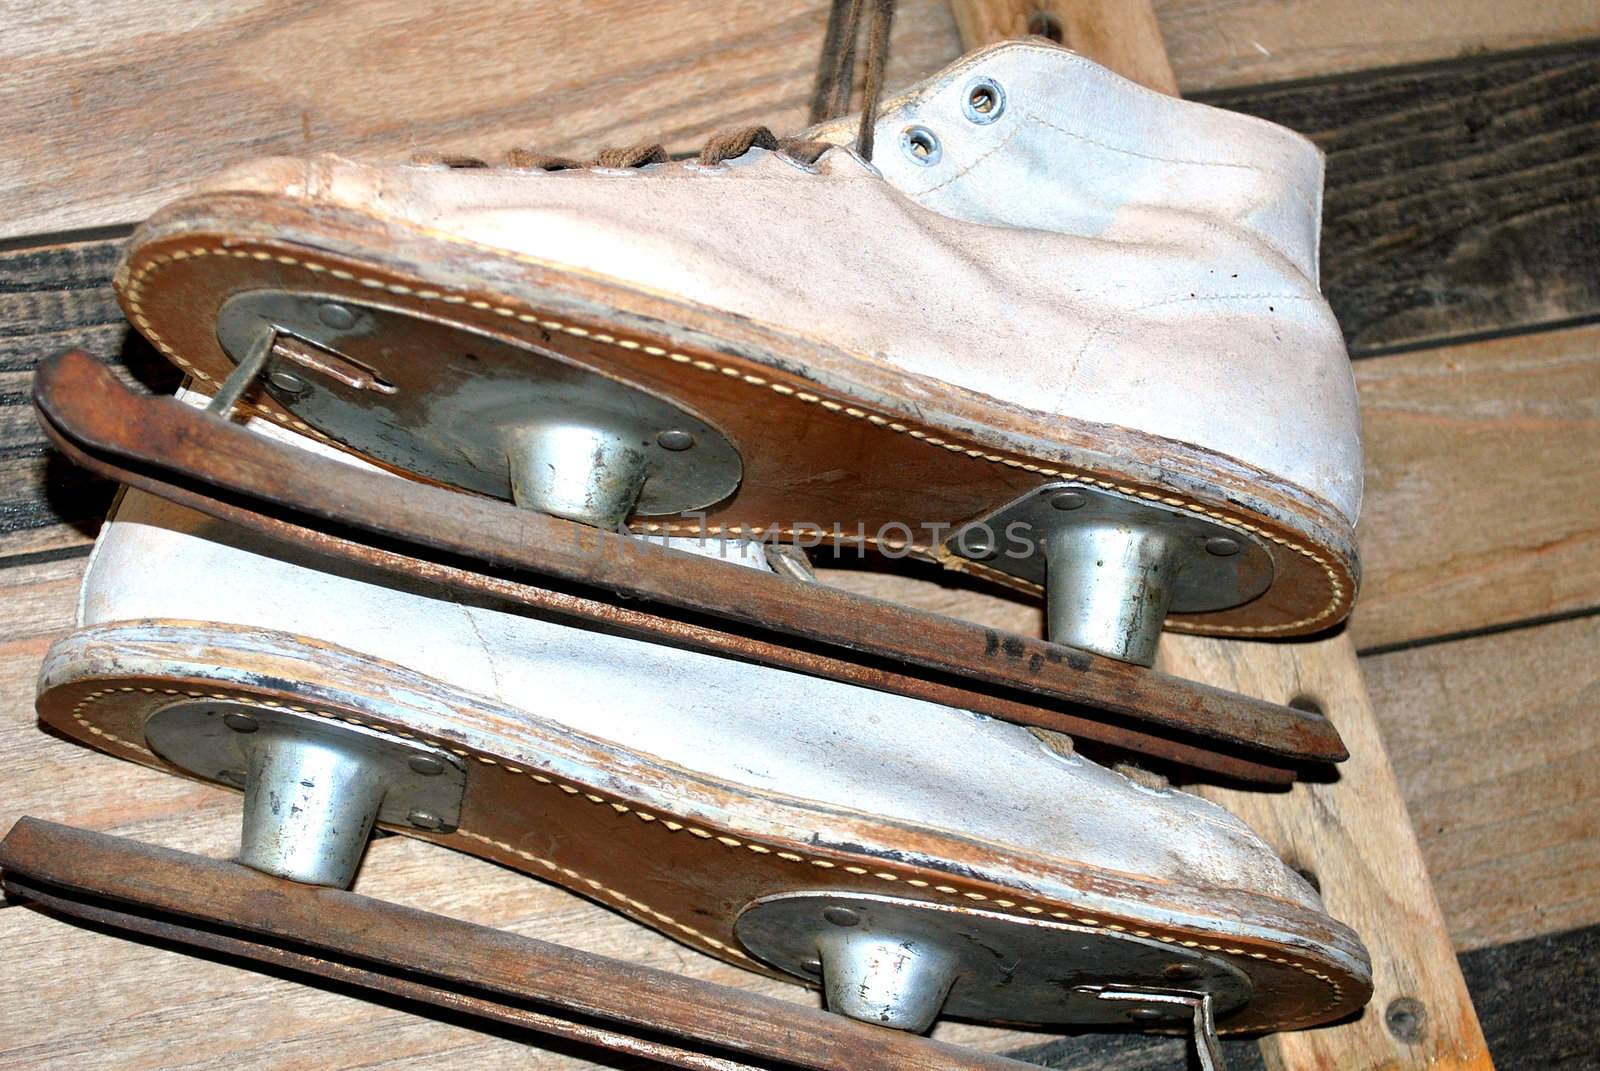 Vintage ice skating boots on display.